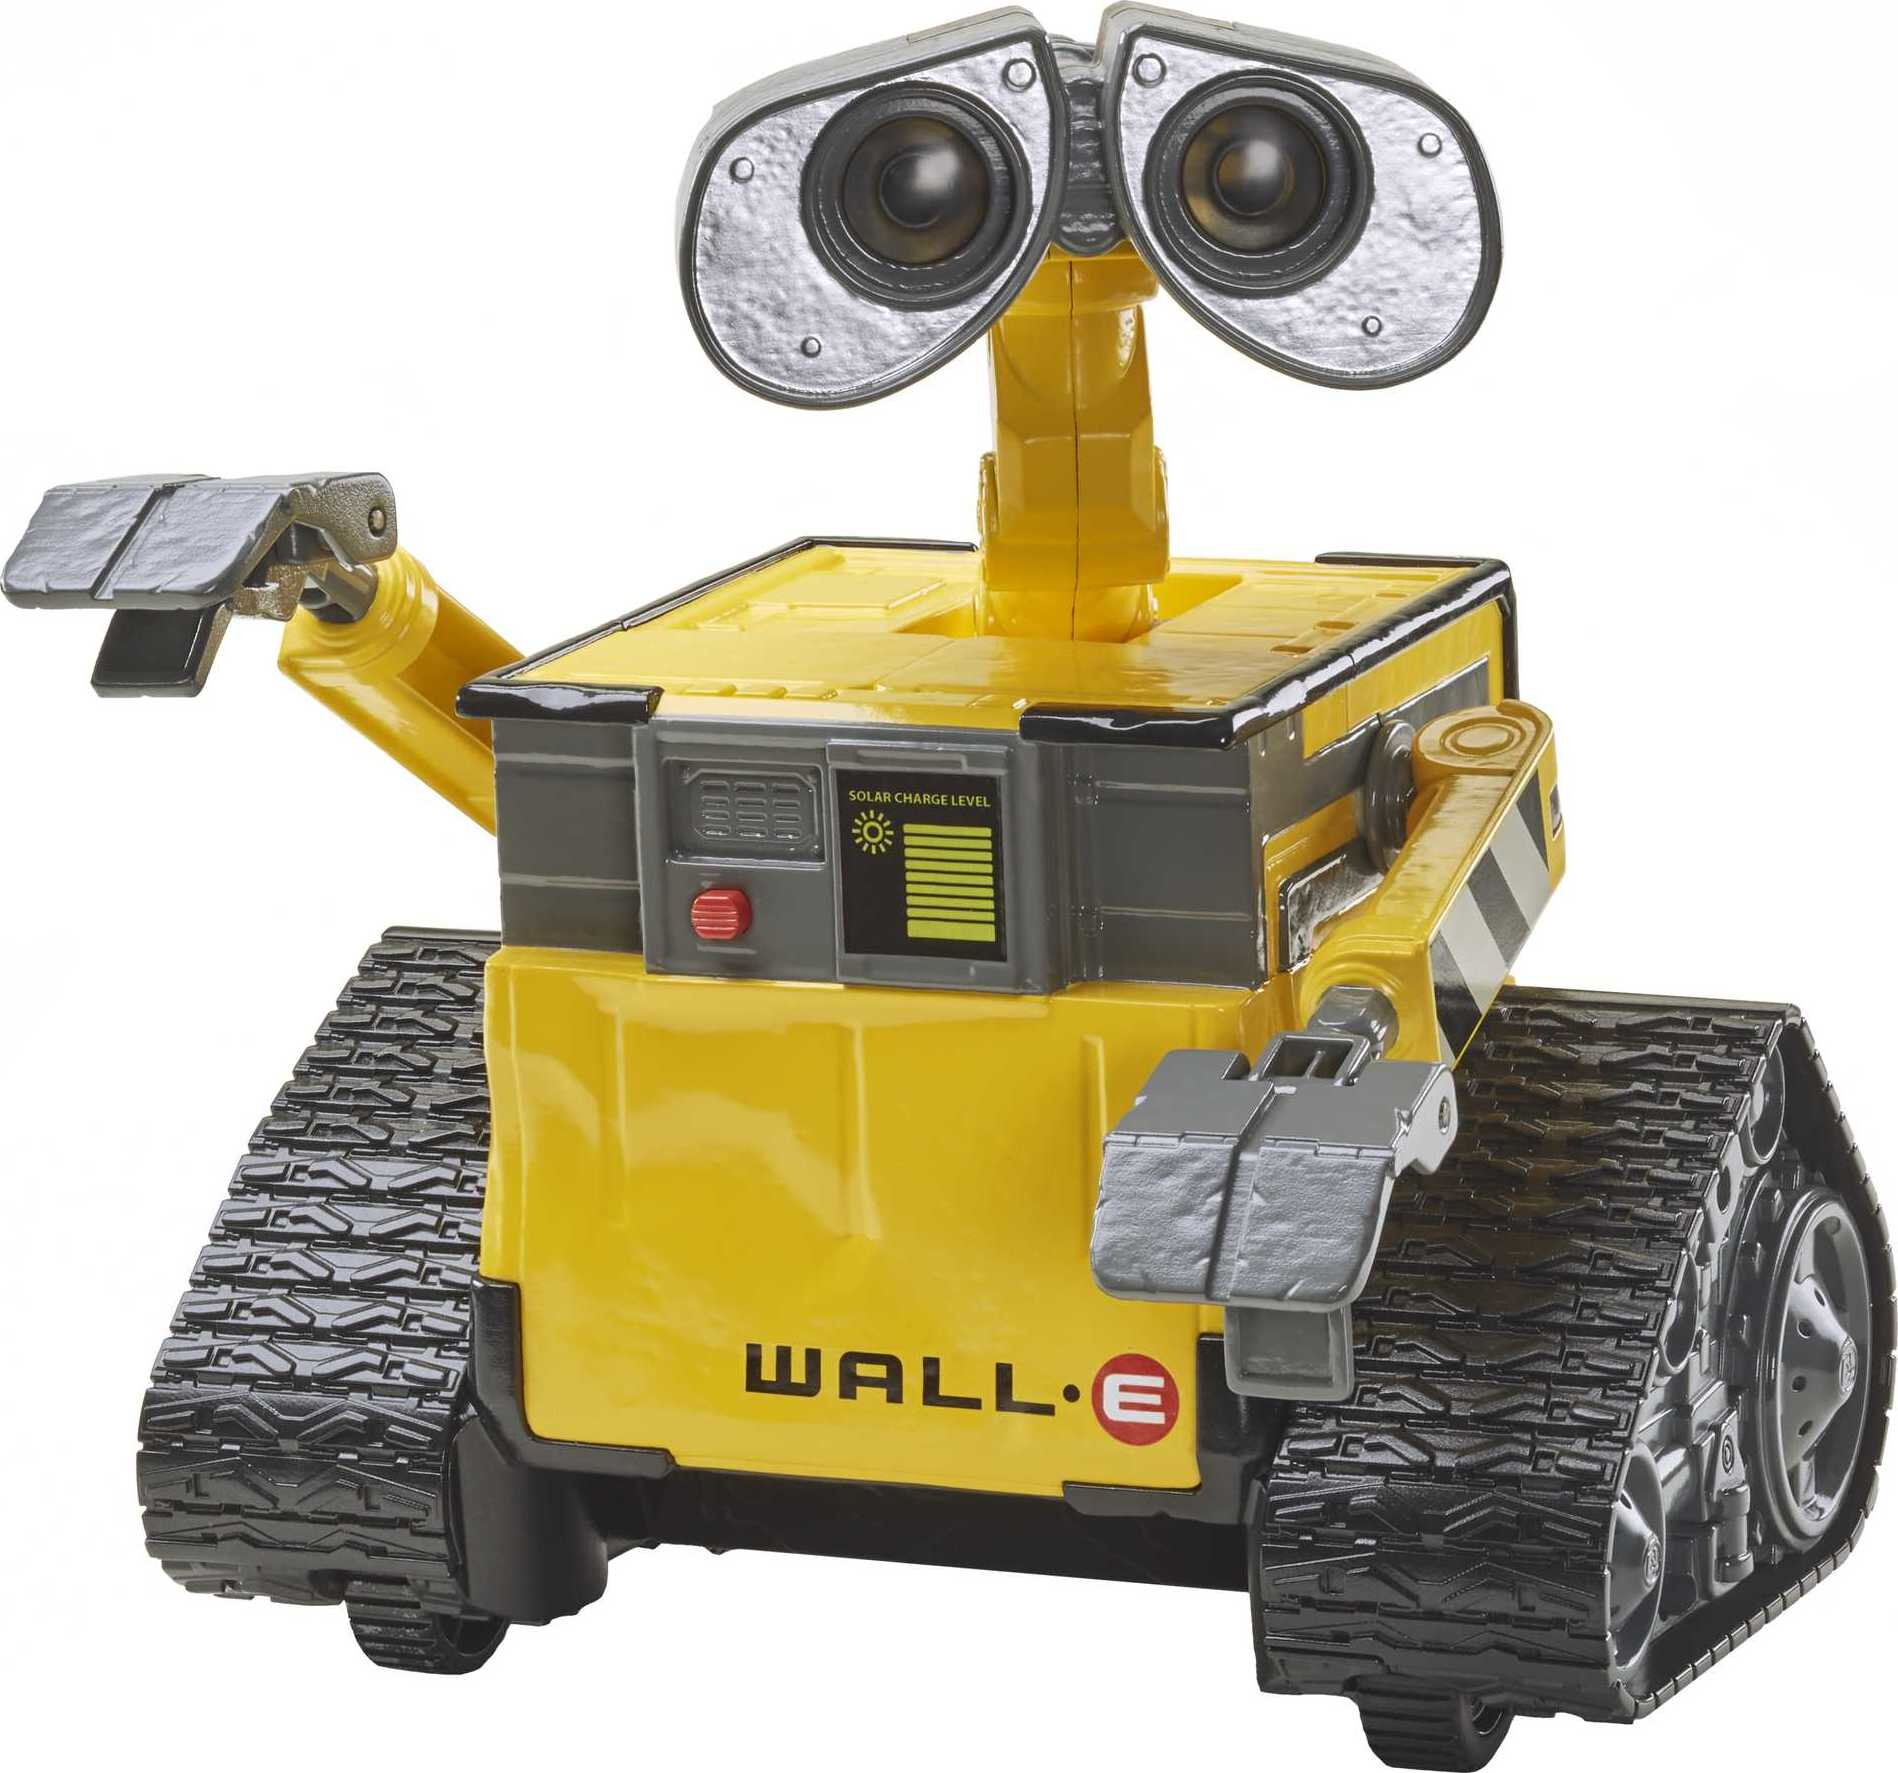 Disney and Pixar WALL-E Robot Toy, Remote Control Hello WALL-E Robot - image 1 of 7